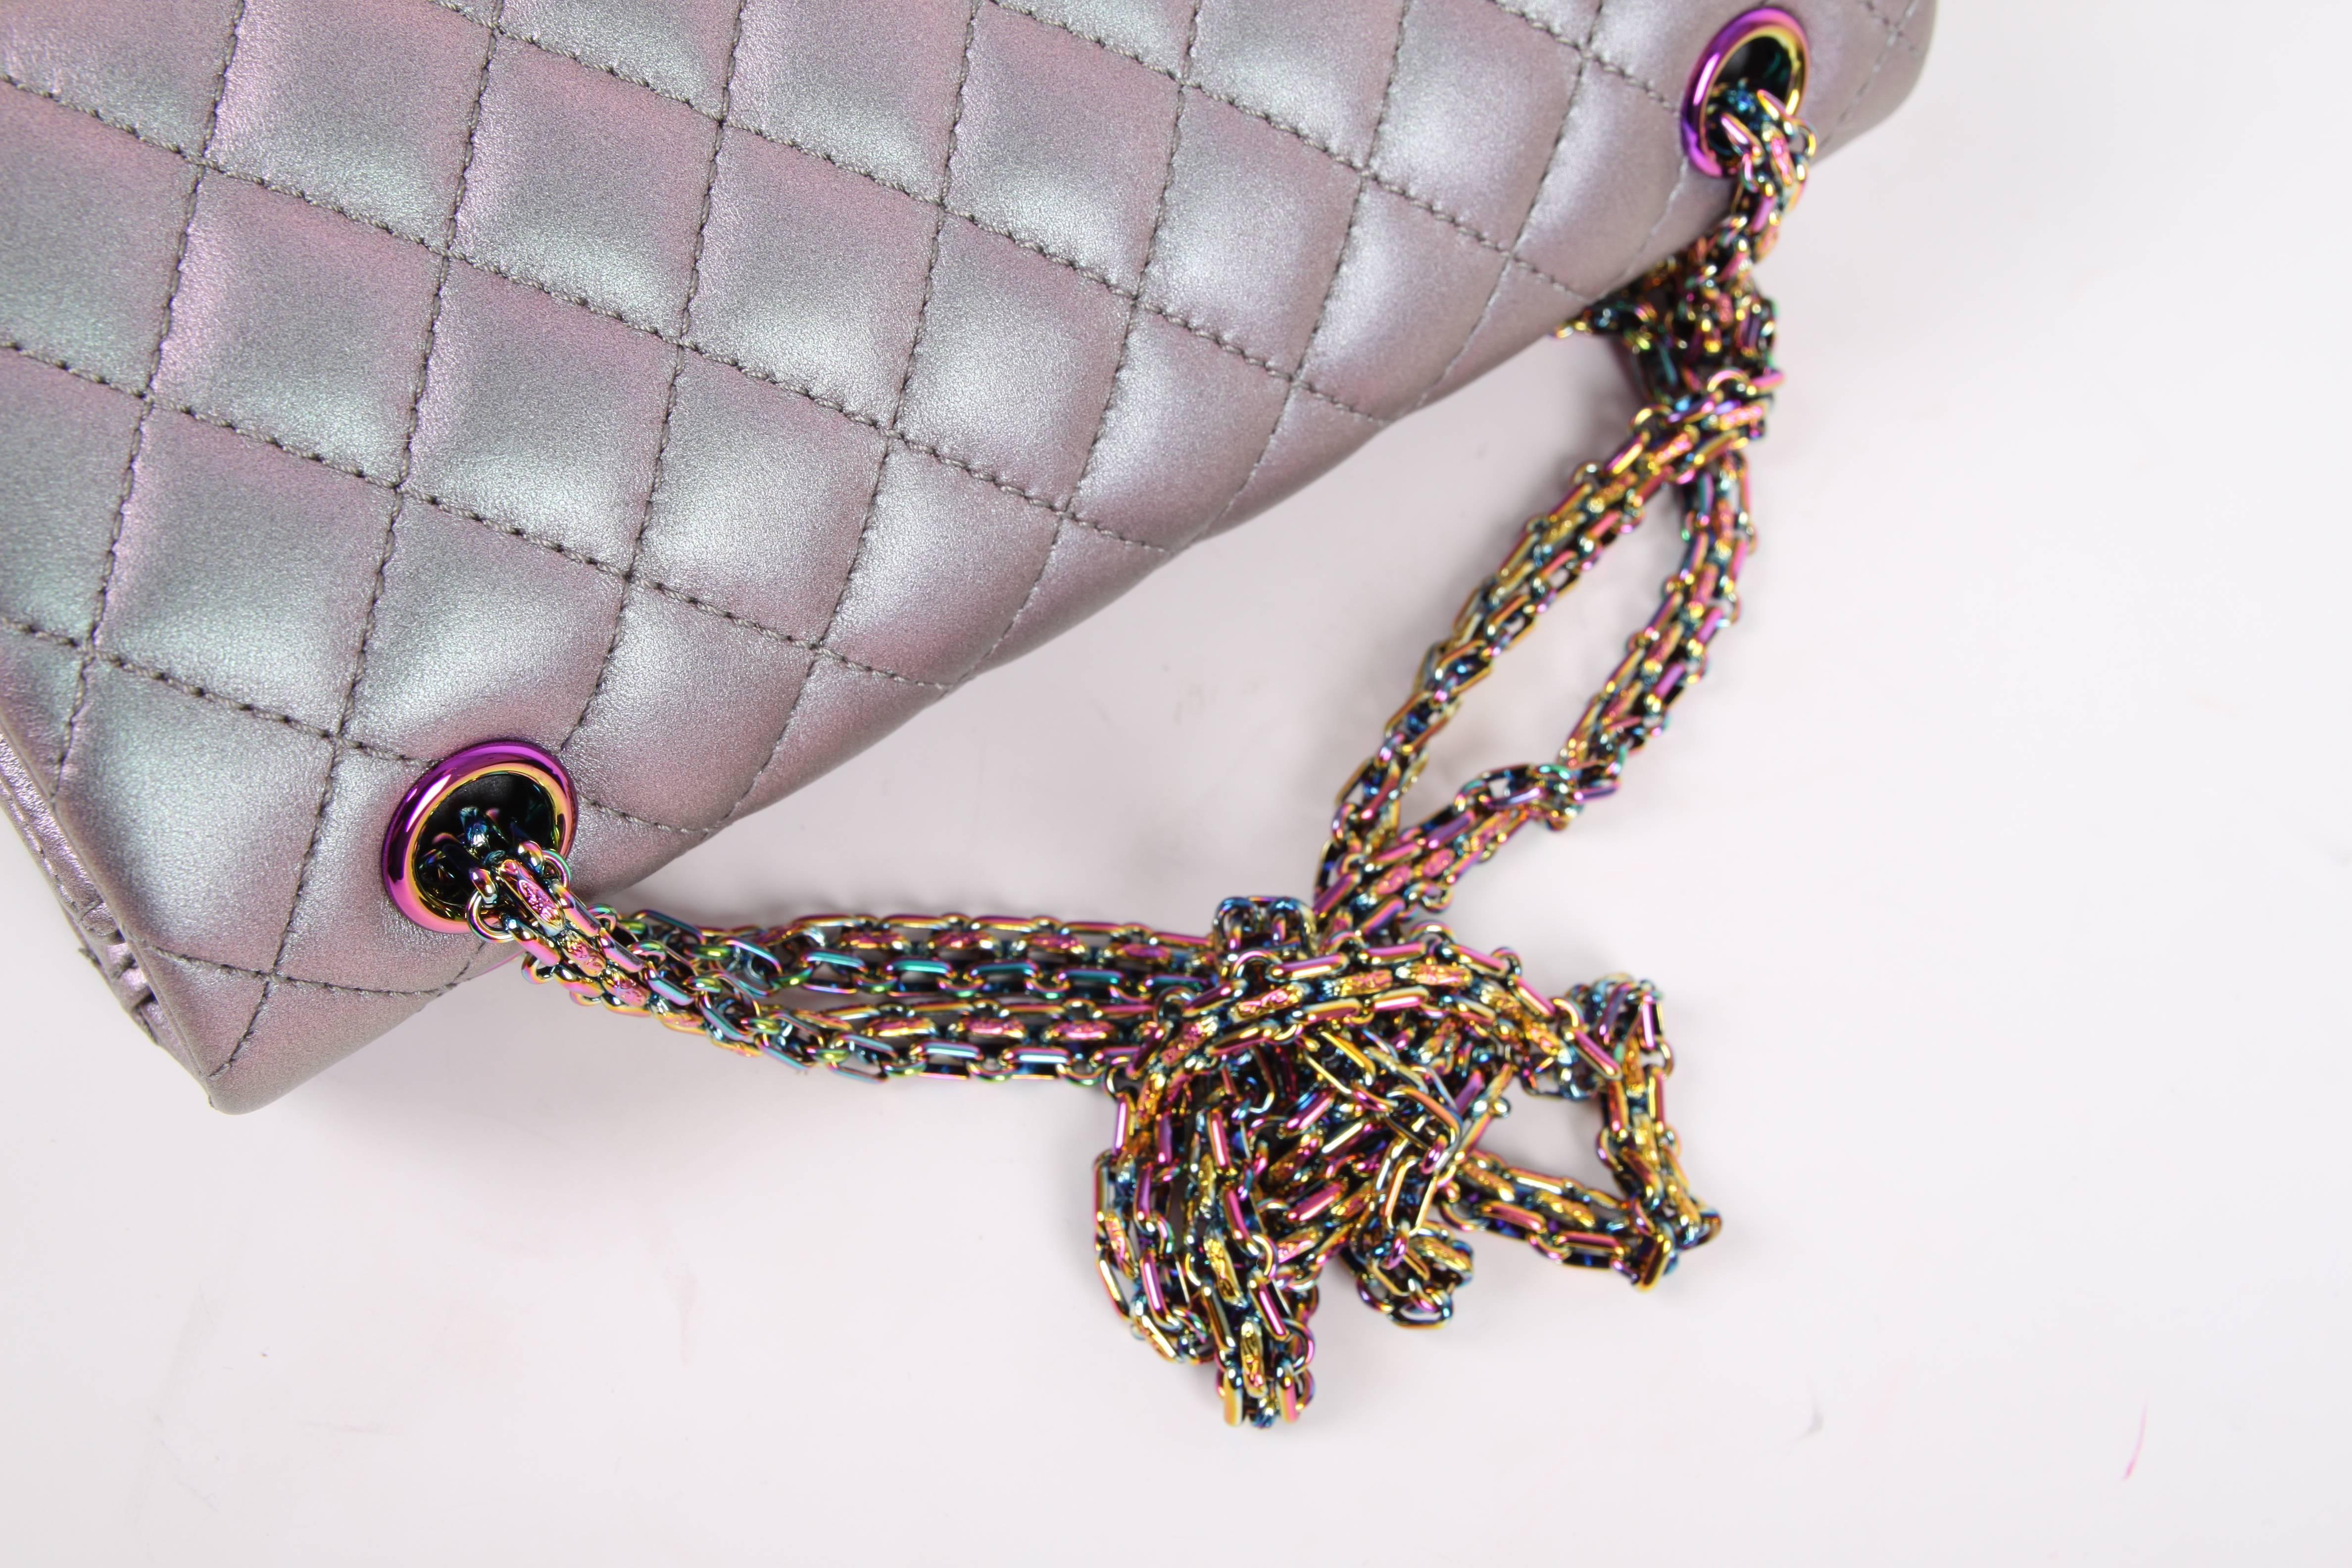 Women's or Men's   Chanel Medium 2.55 Reissue Double Flap Bag - Lilac Iridescent Mermaid   